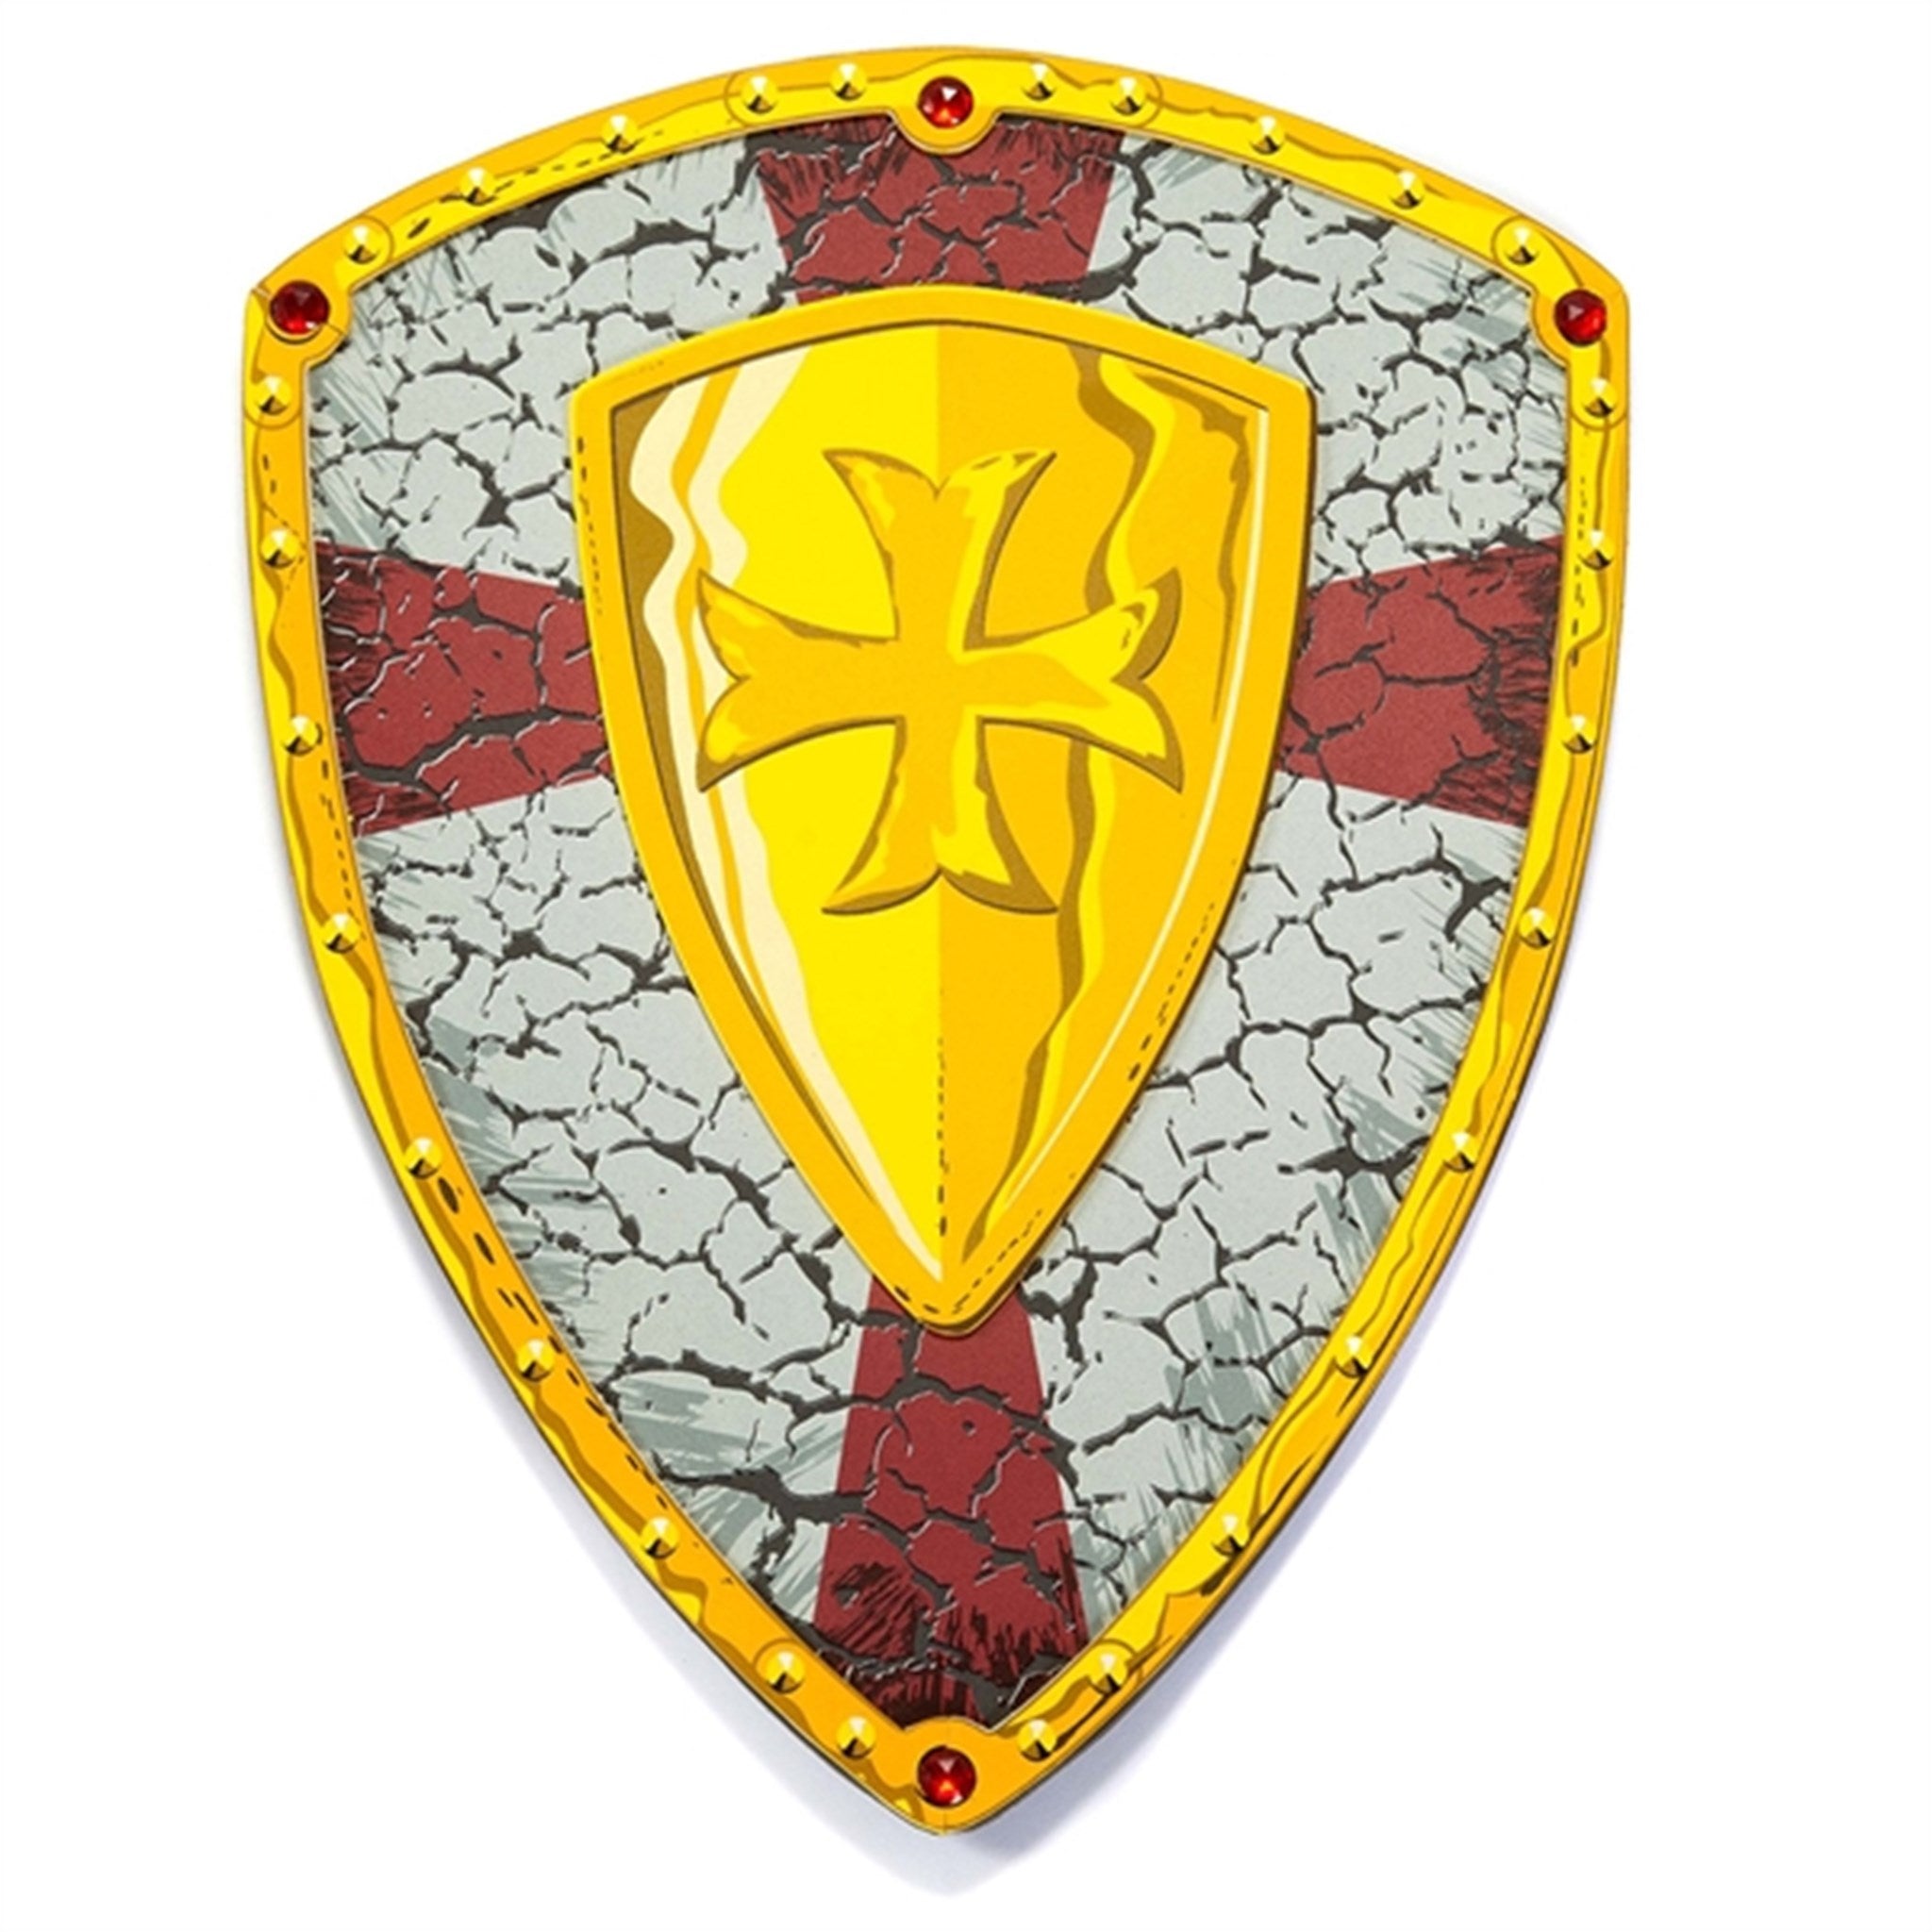 Great Pretenders Crusader EVA Knight Shield